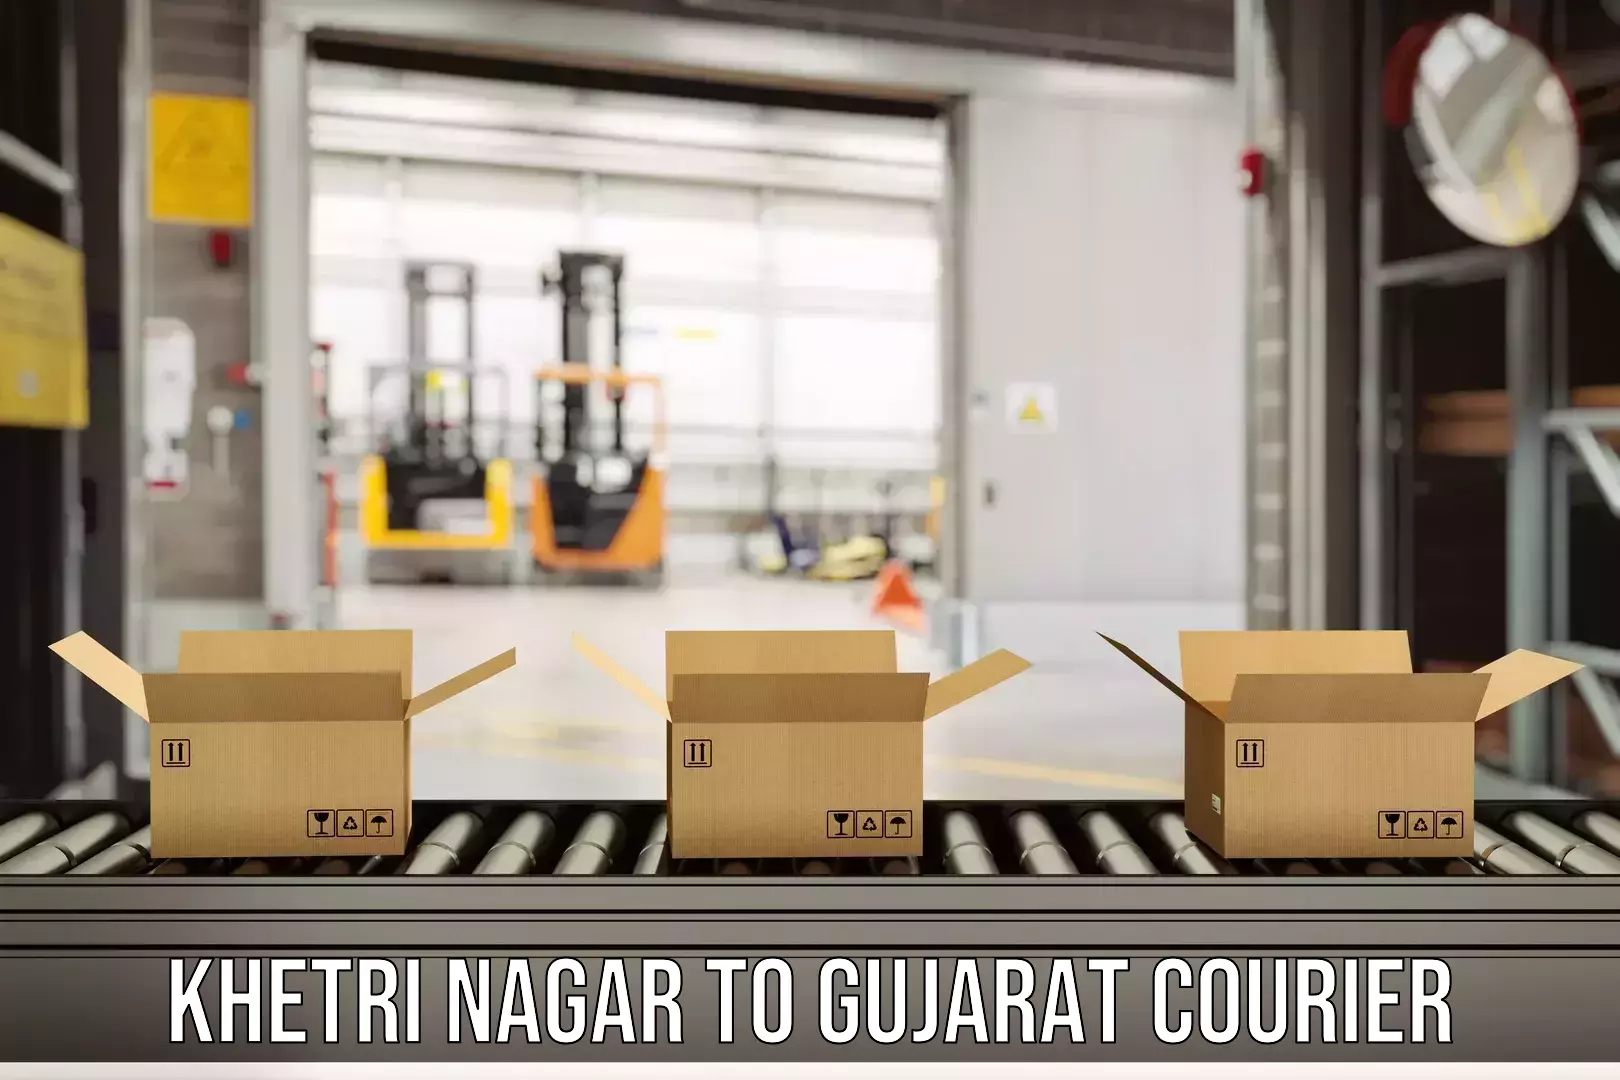 Enhanced tracking features Khetri Nagar to Gujarat